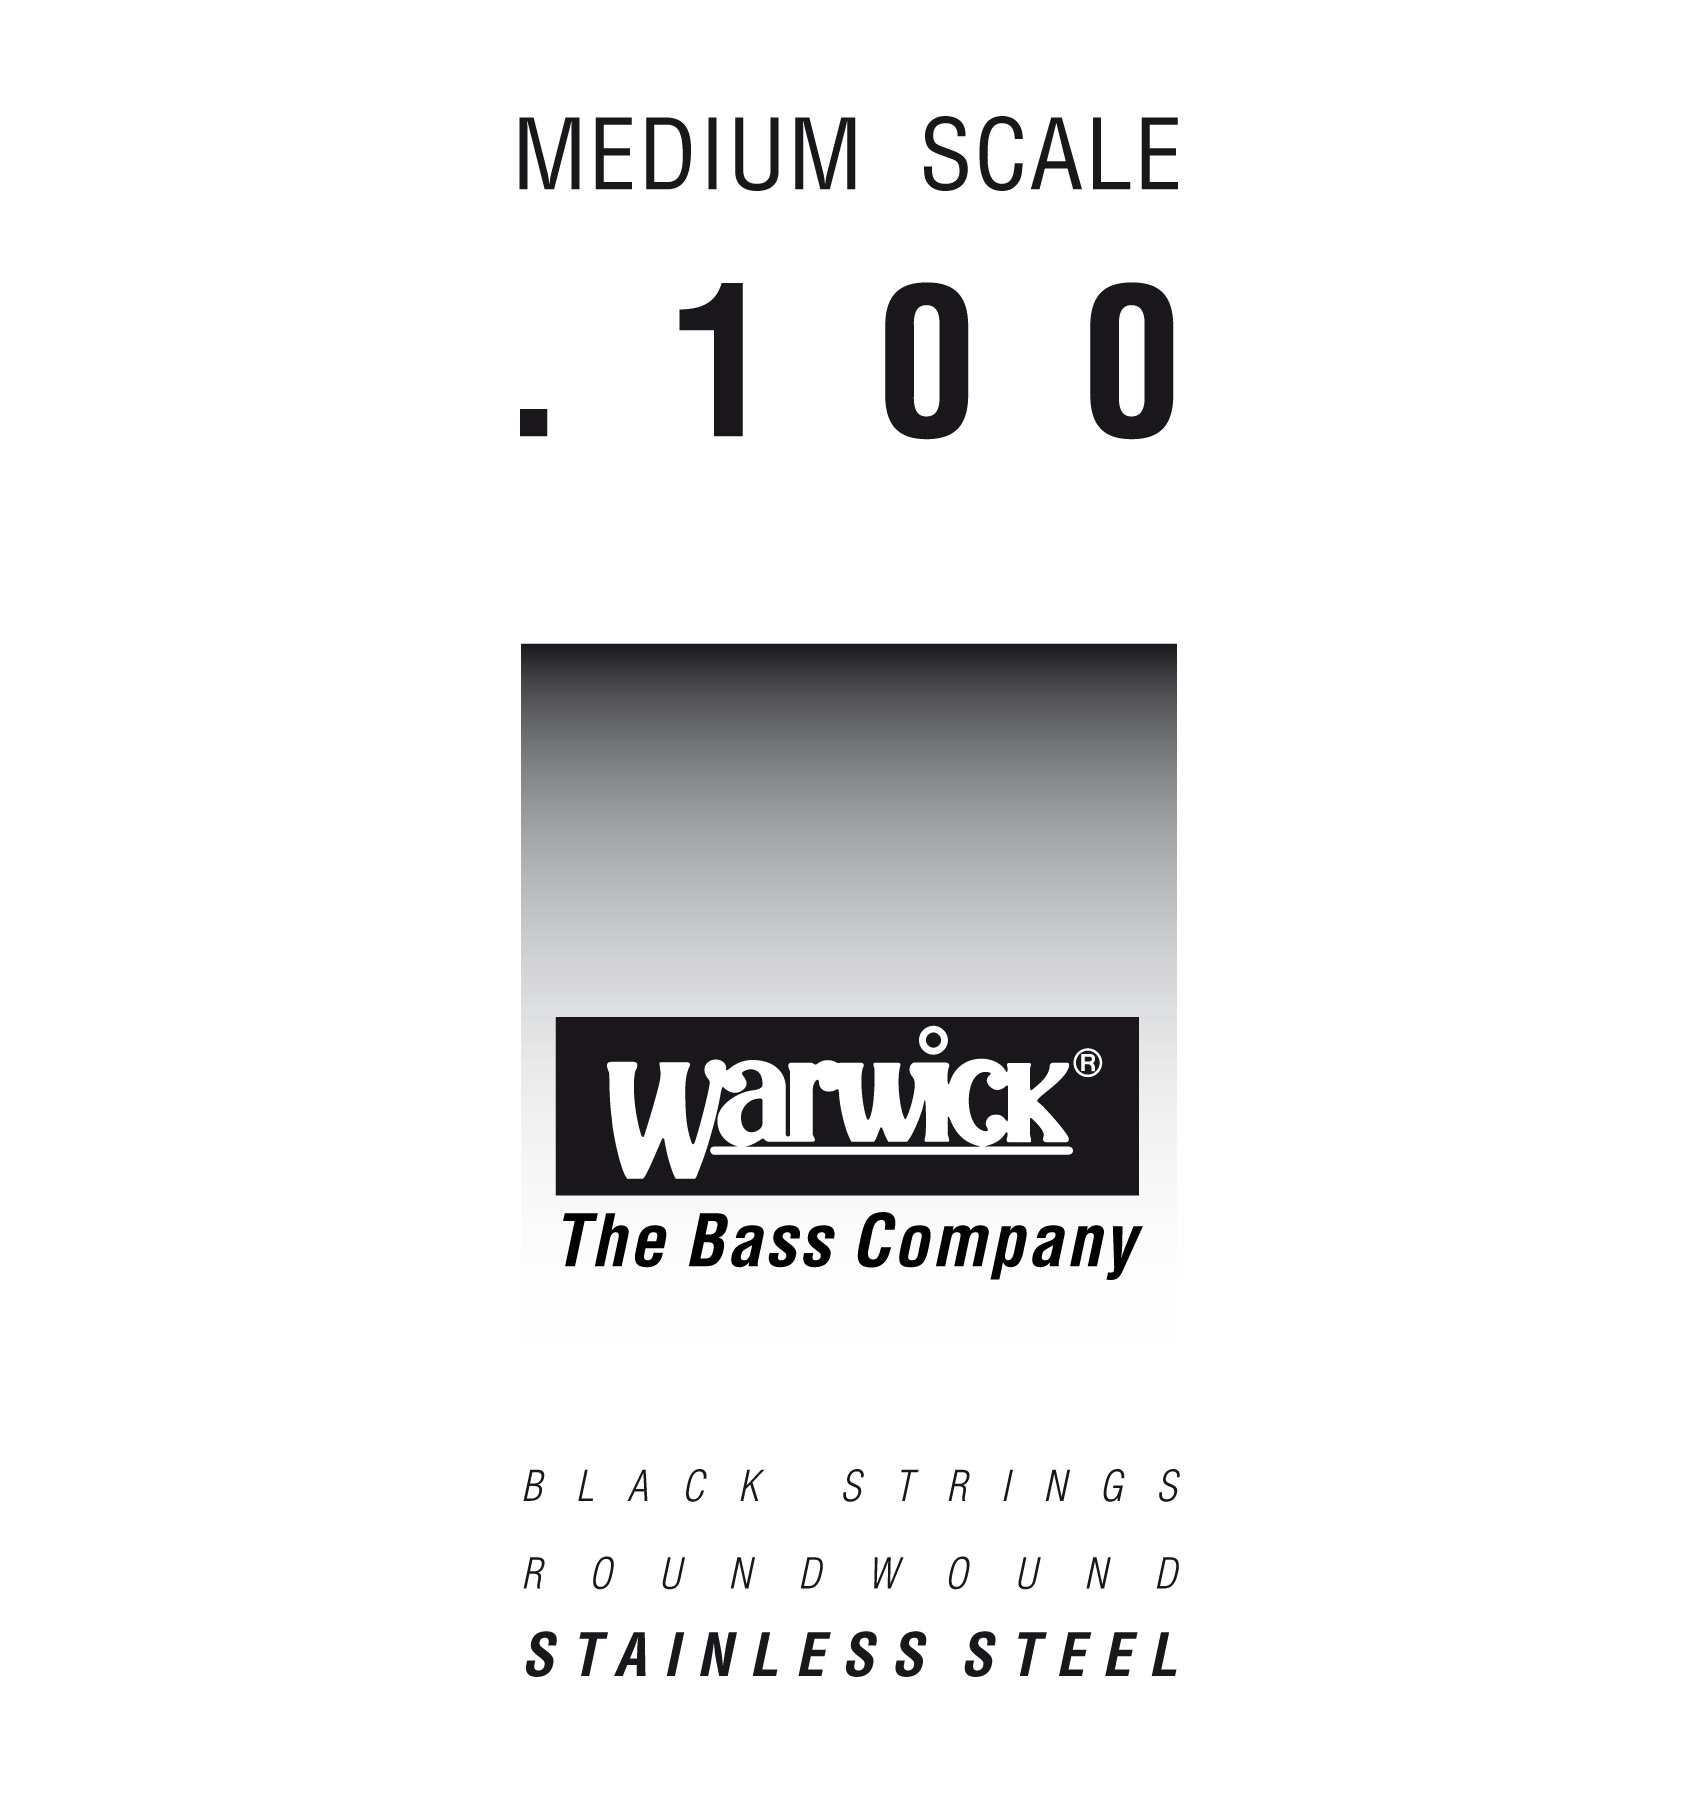 Warwick Black Label Bass Strings, Stainless Steel - Bass Single String, .100", Medium Scale